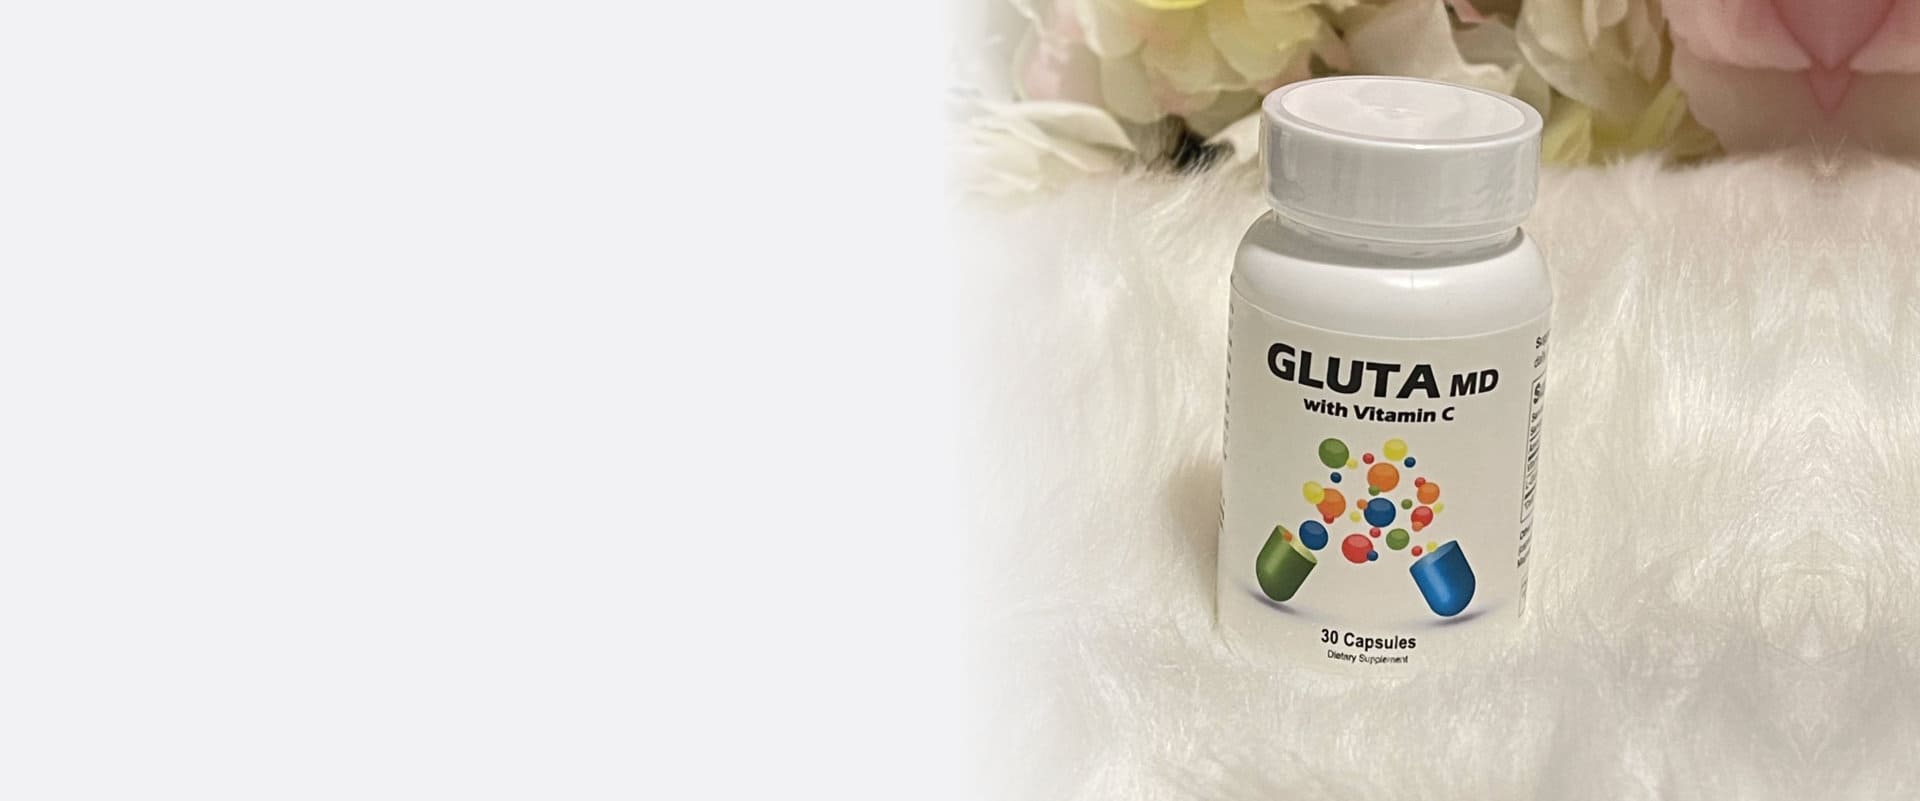 gluta with vitamin c